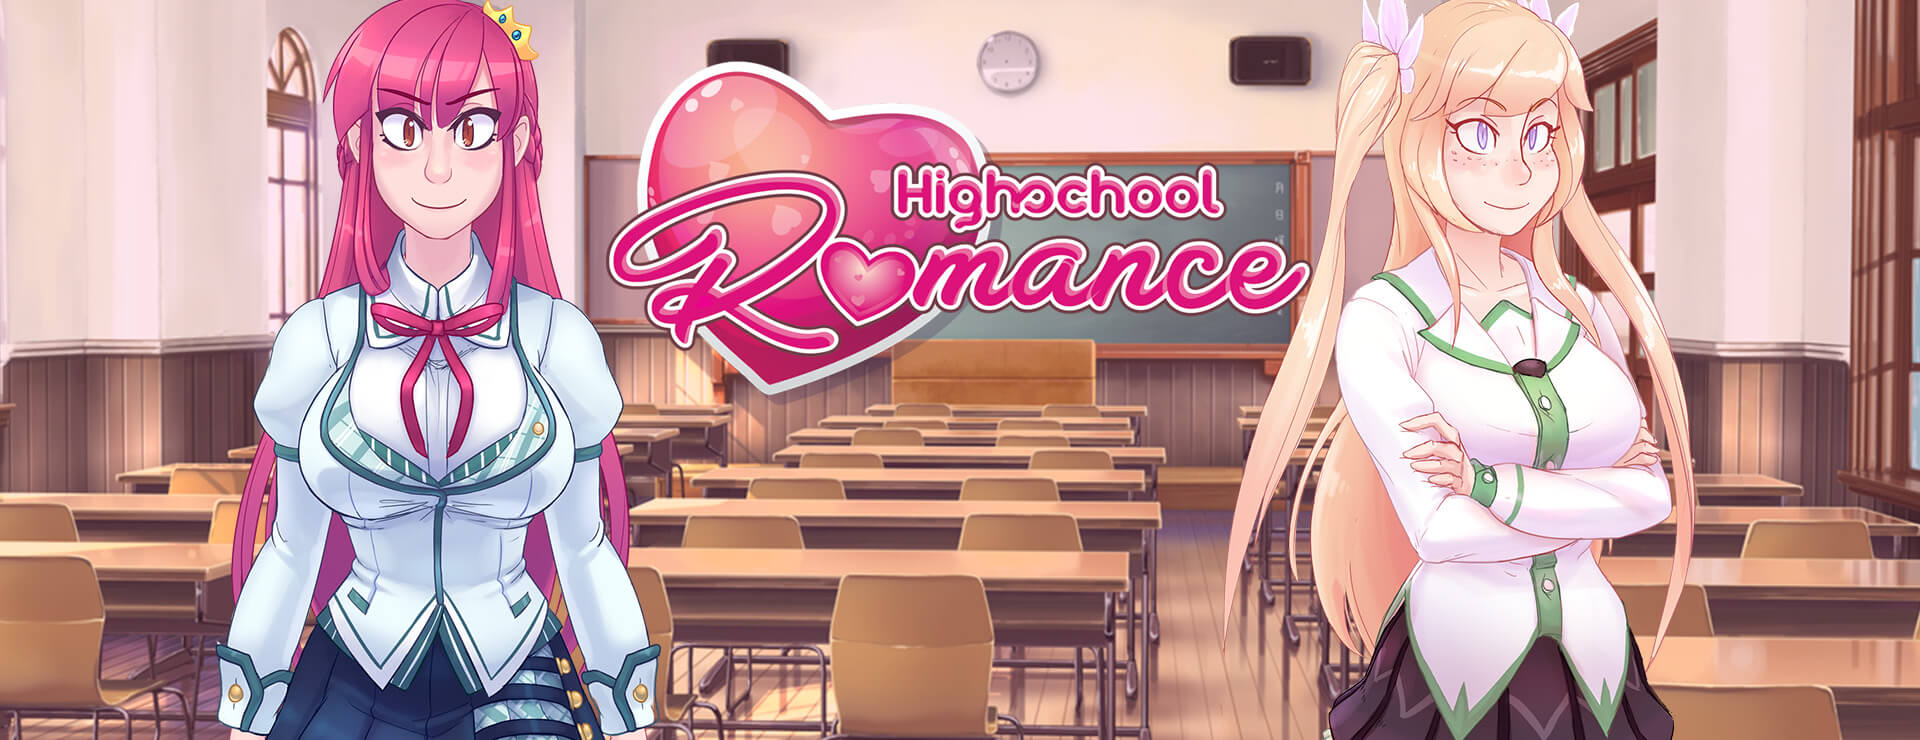 Highschool Romance - Visual Novel Game